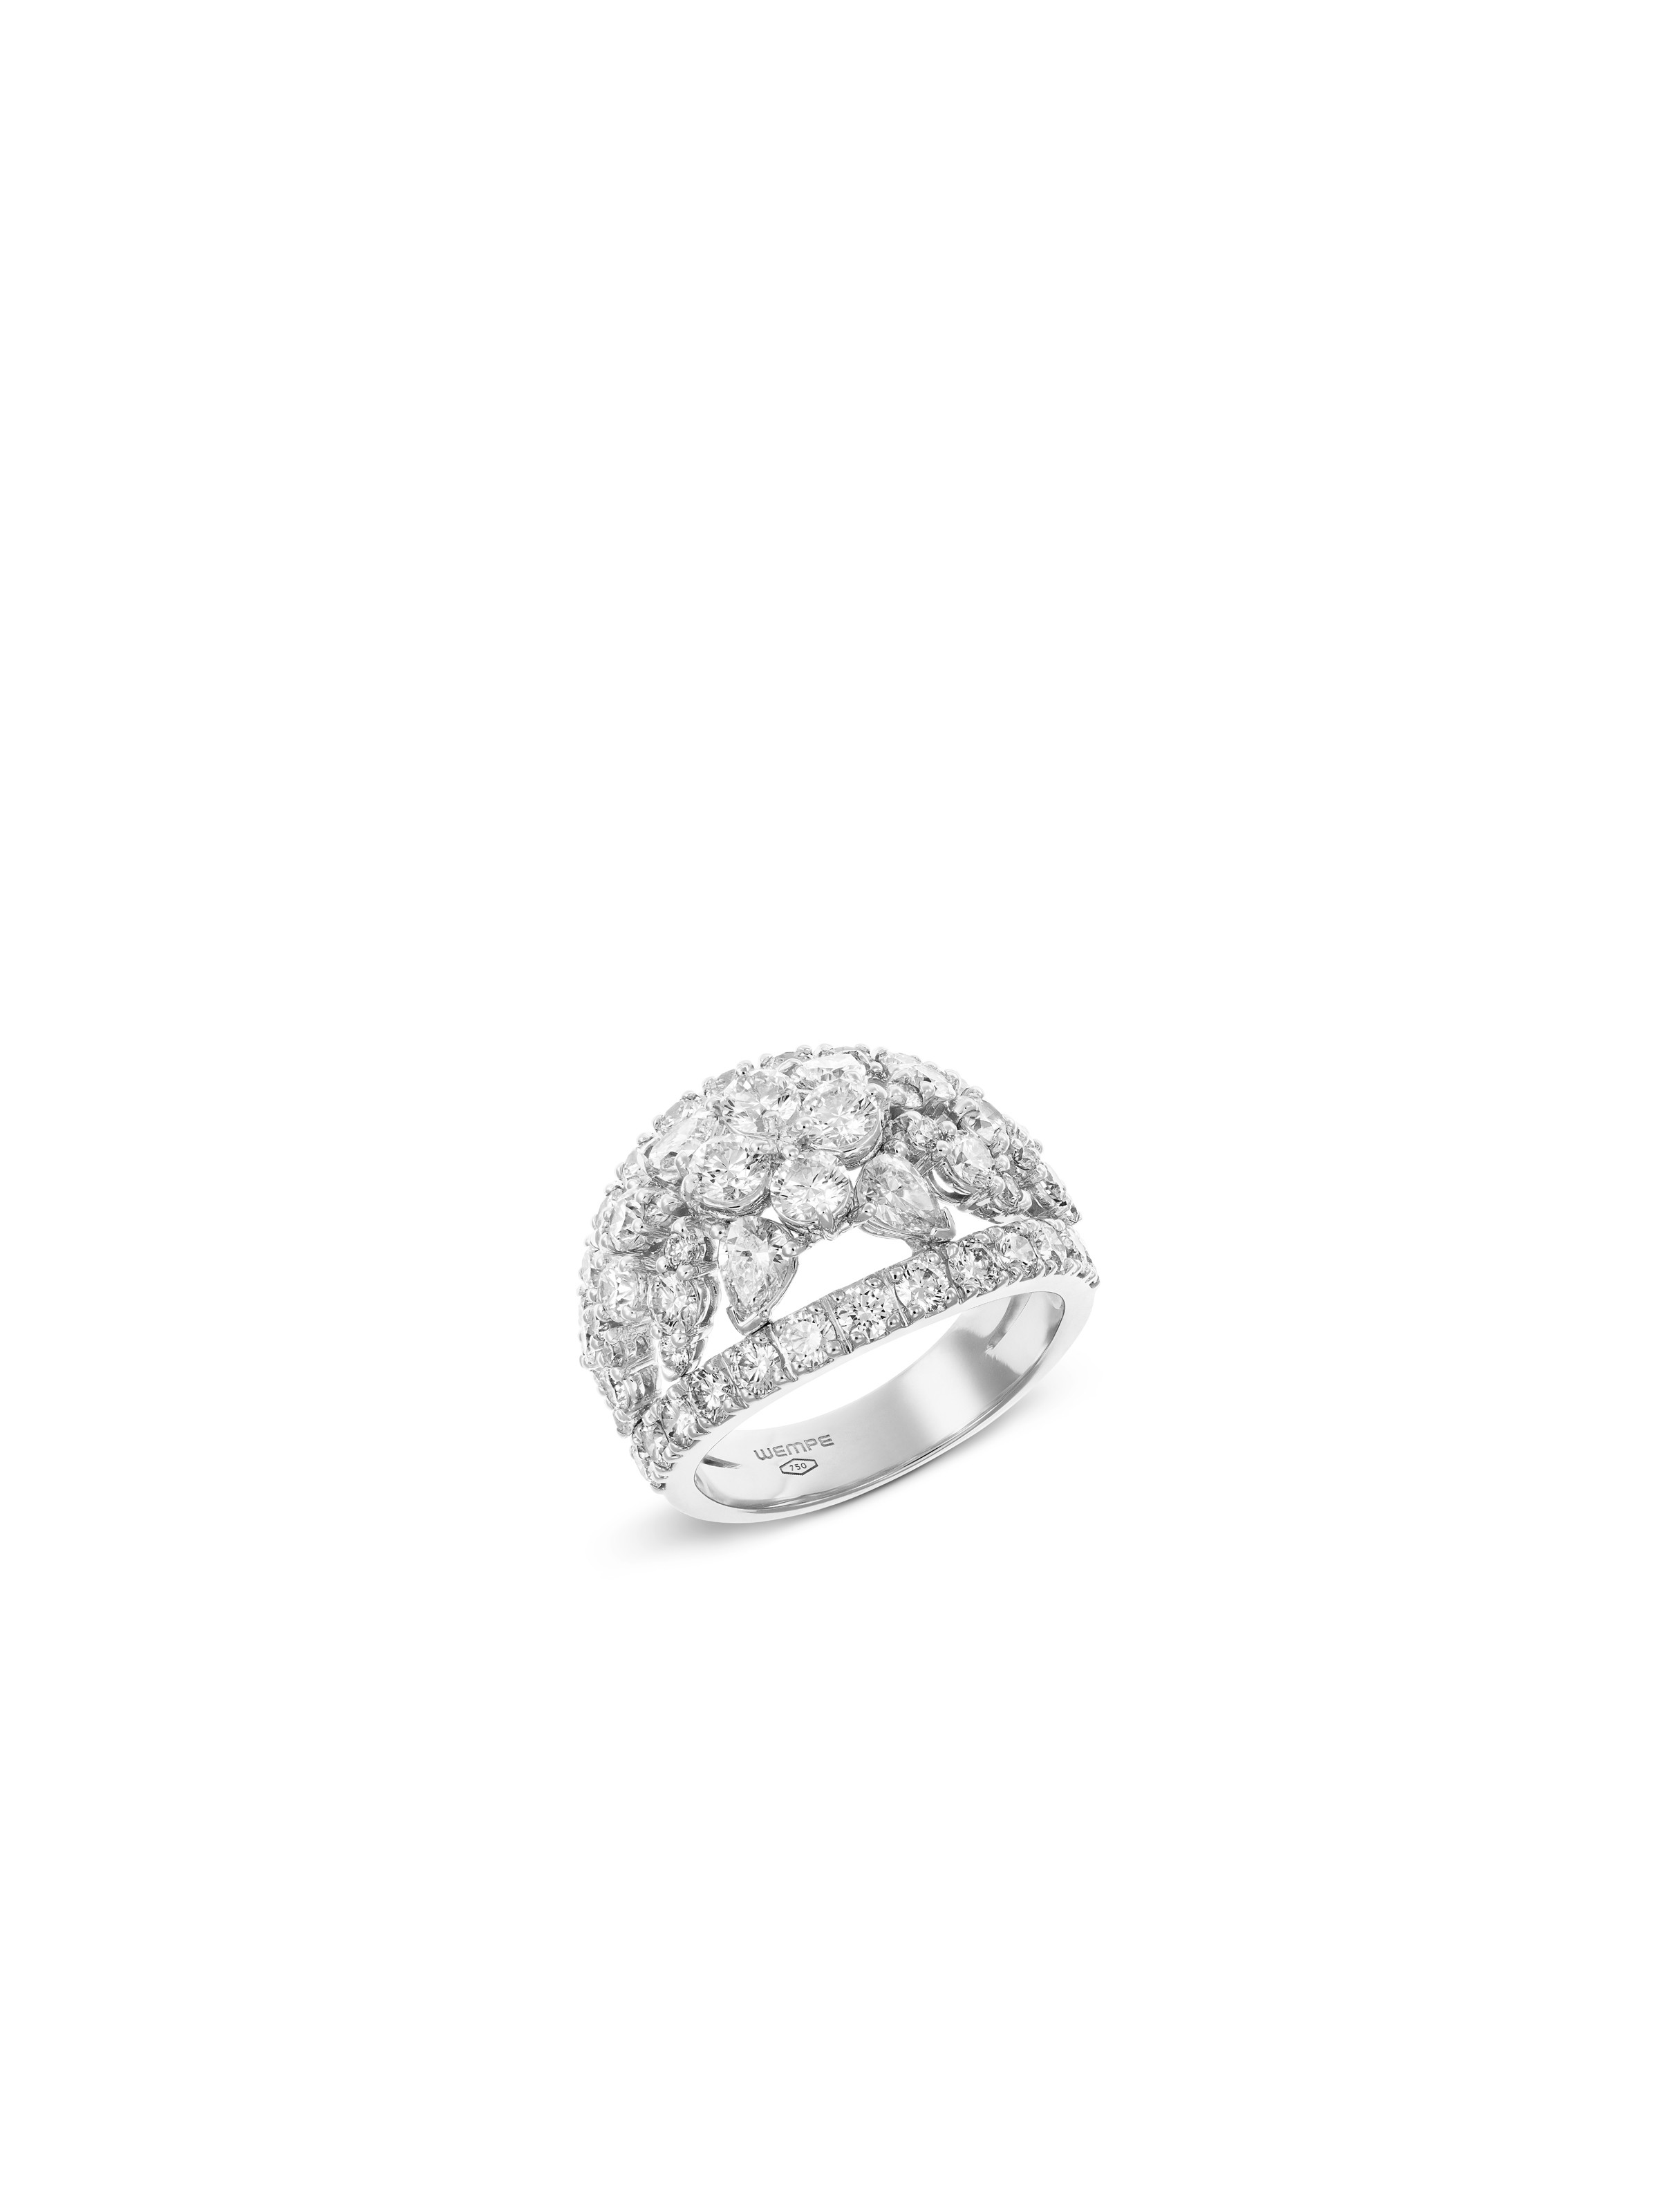 Rings | Wempe Jewelers